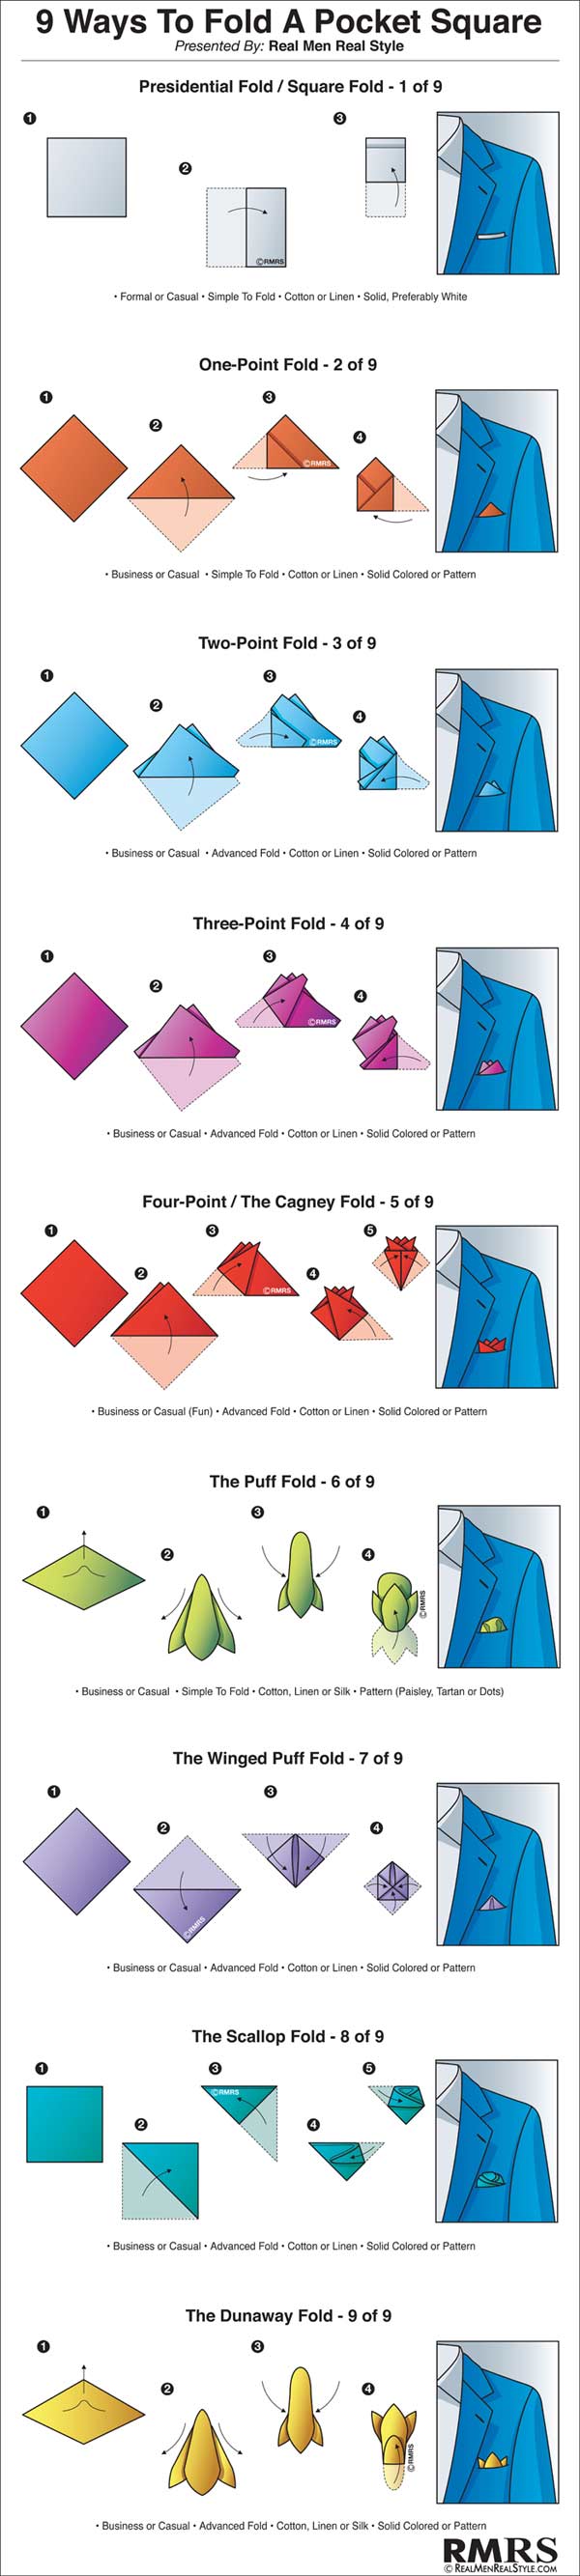 Folding A Pocket Square 9-Ways-To-Fold-A-Pocket-Square-Infographic-